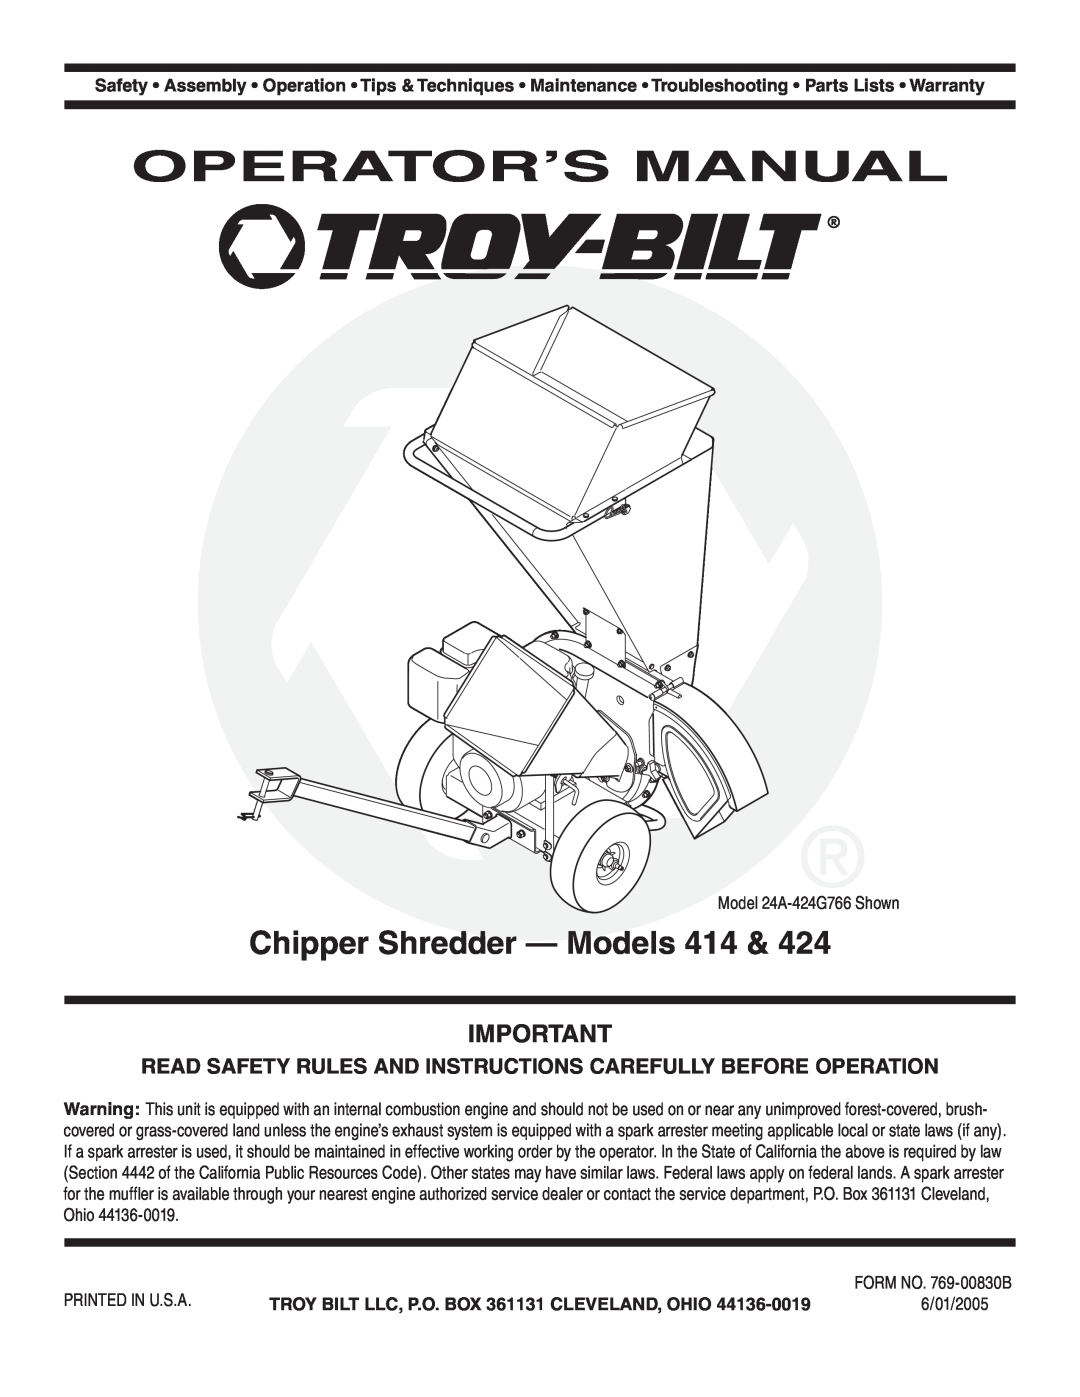 Troy-Bilt 424, 414 manual Operator’S Manual, Chipper Shredder - Models, TROY BILT LLC, P.O. BOX 361131 CLEVELAND, OHIO 